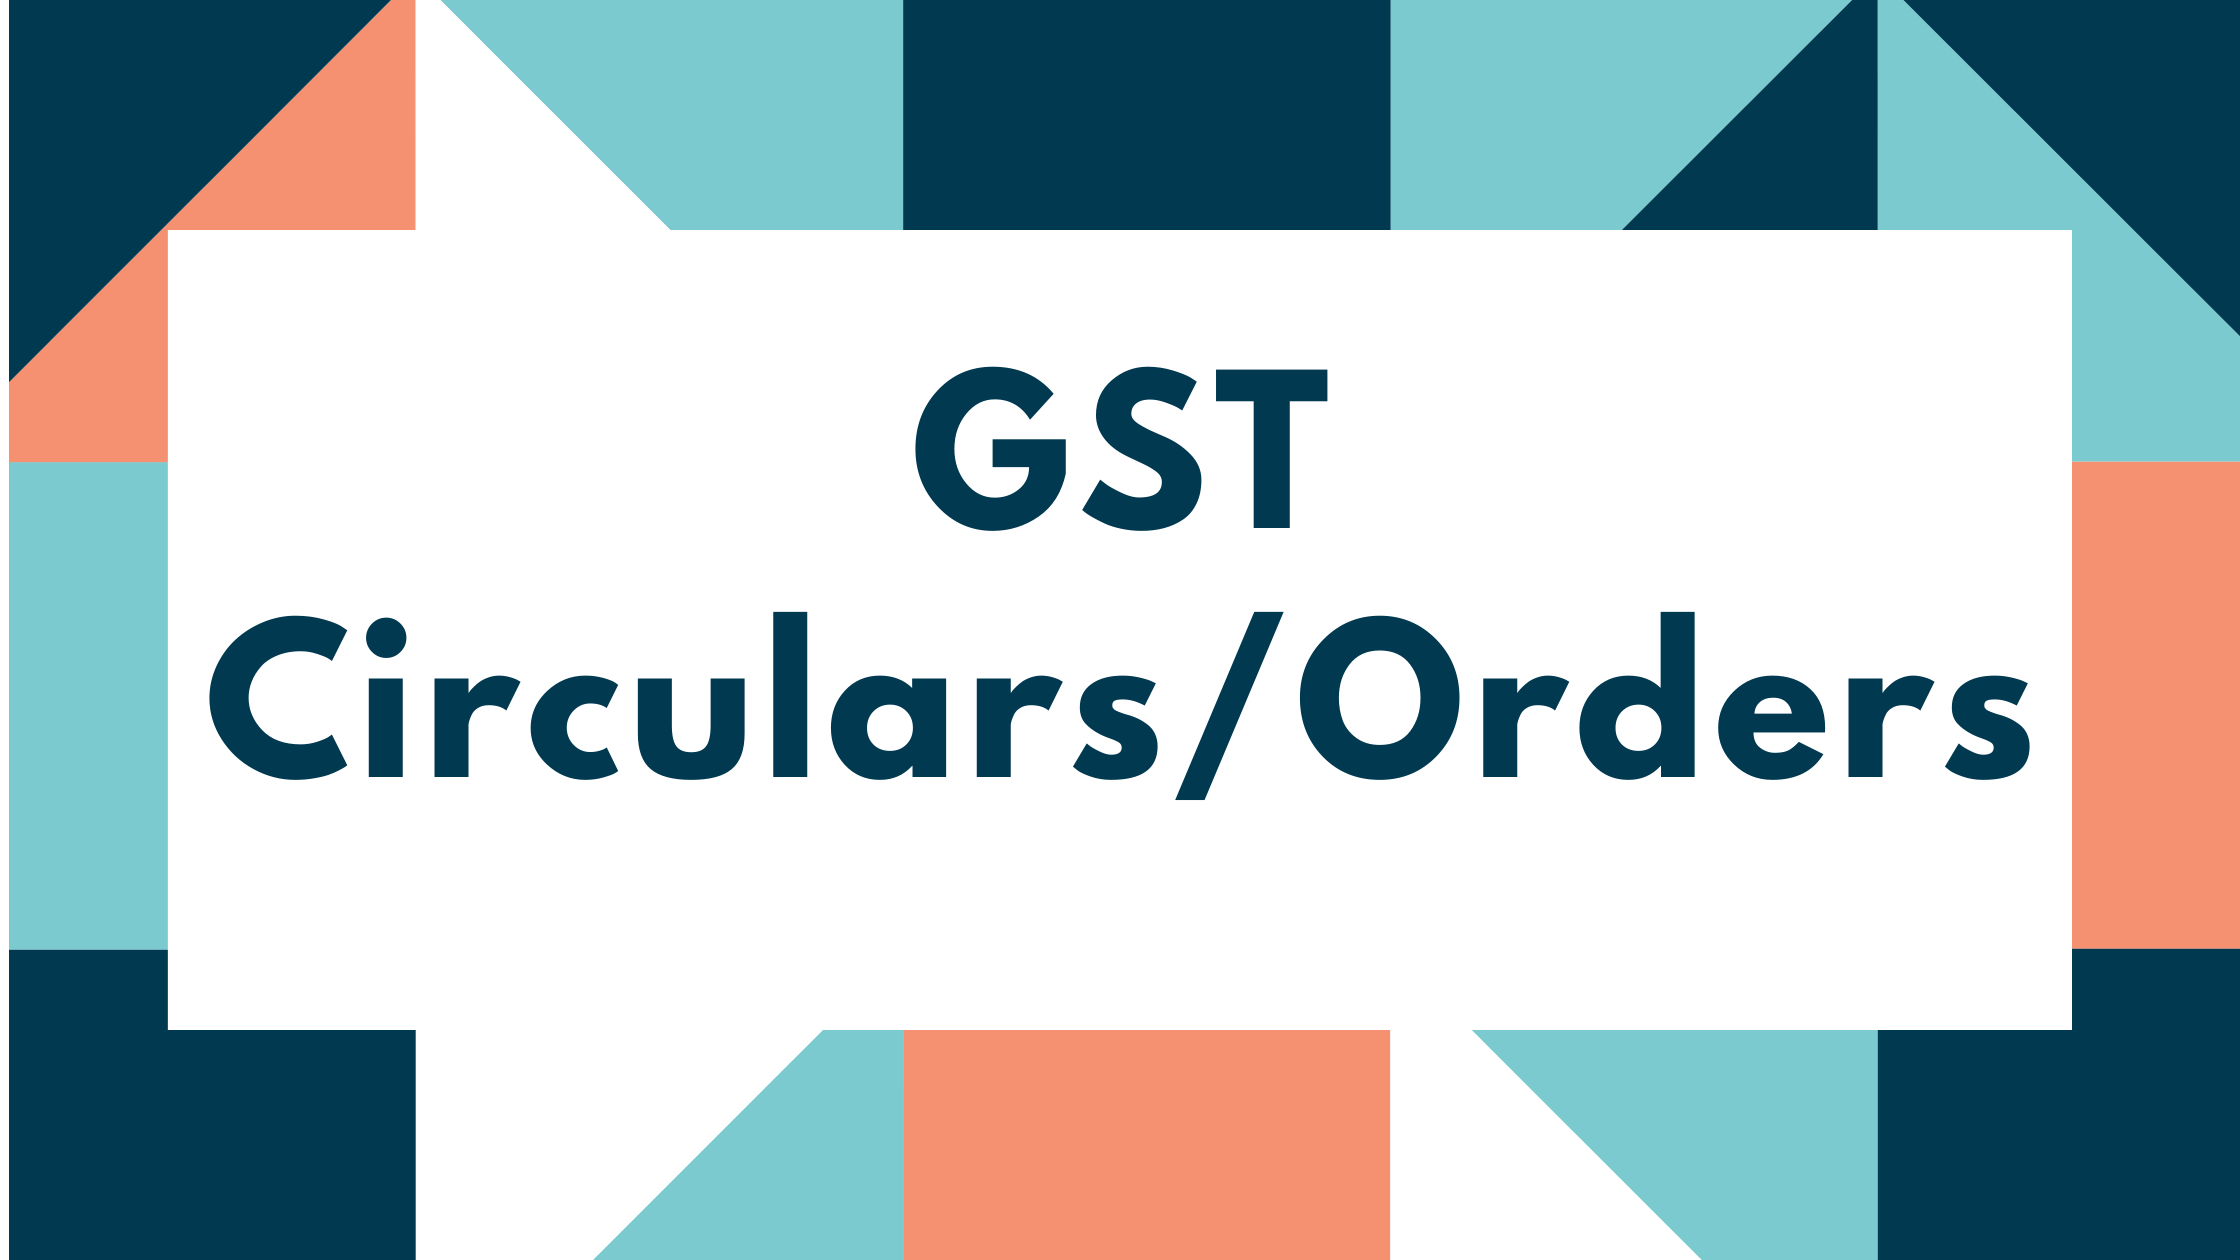 GST Circulars/Orders